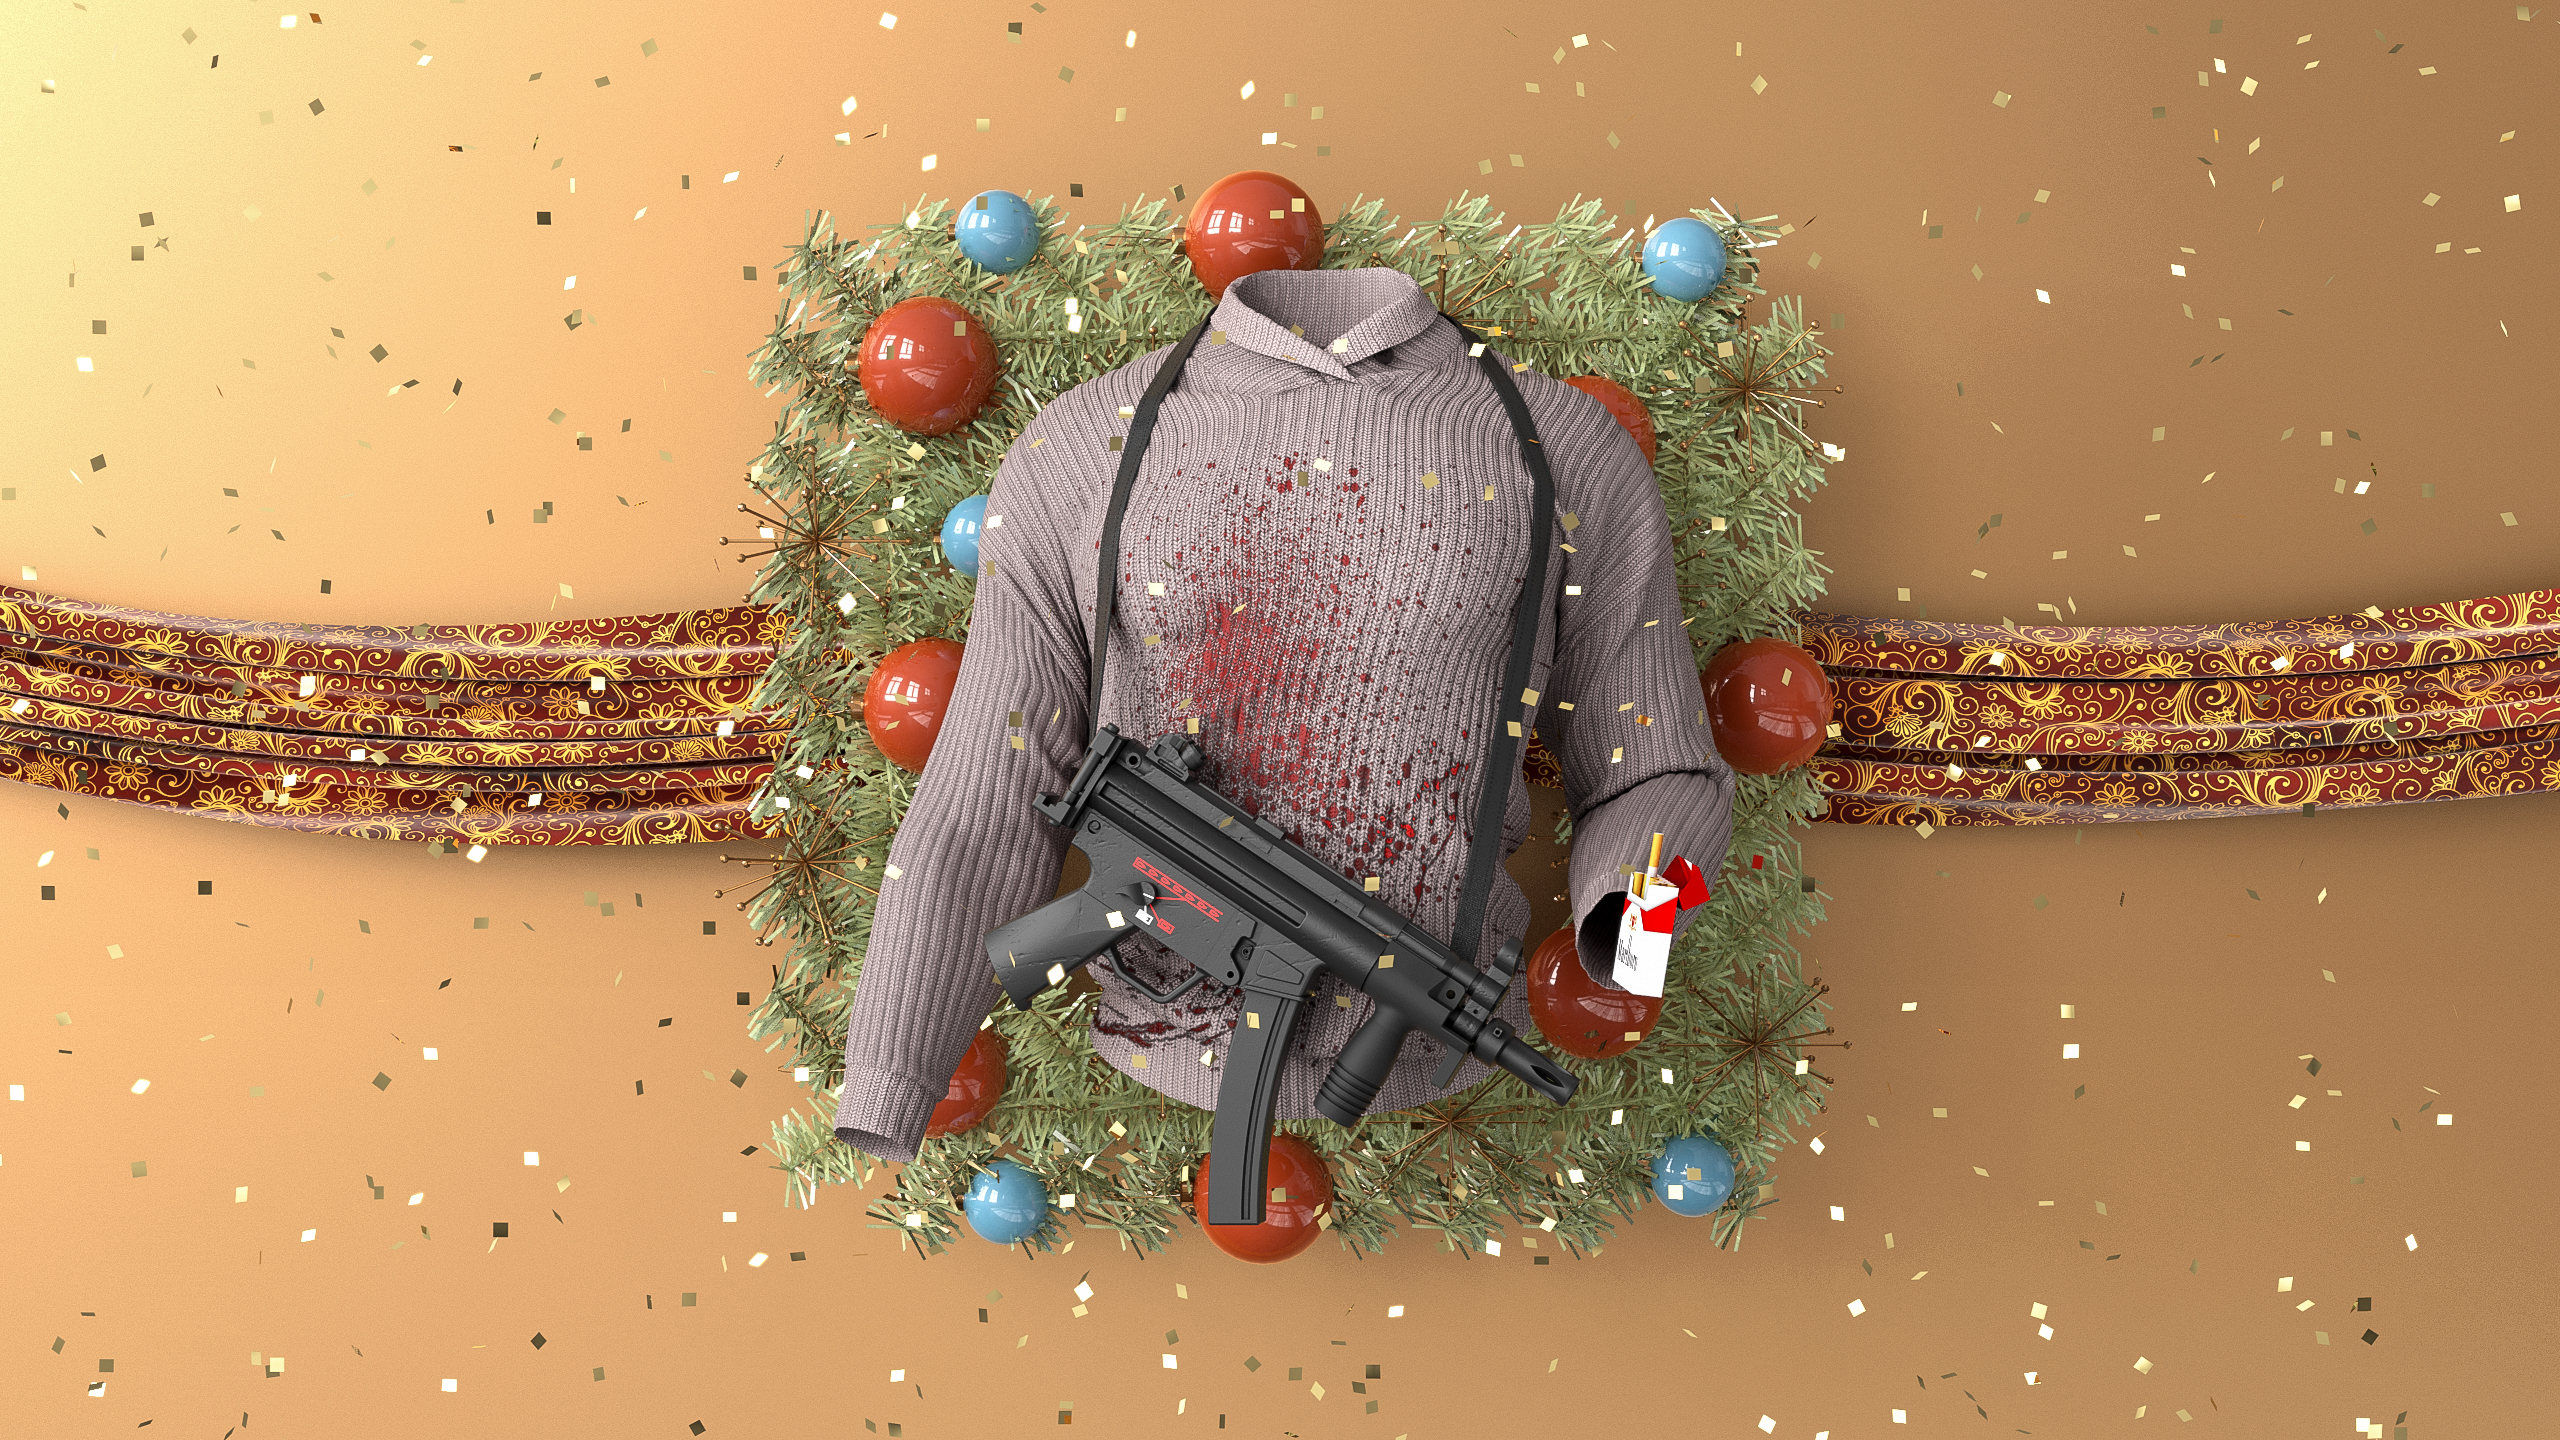 Christmas Sweater Marlboro Heckler Koch Confetti Movies Plants Balls 3D CGi Digital Art Concept Art  2560x1440